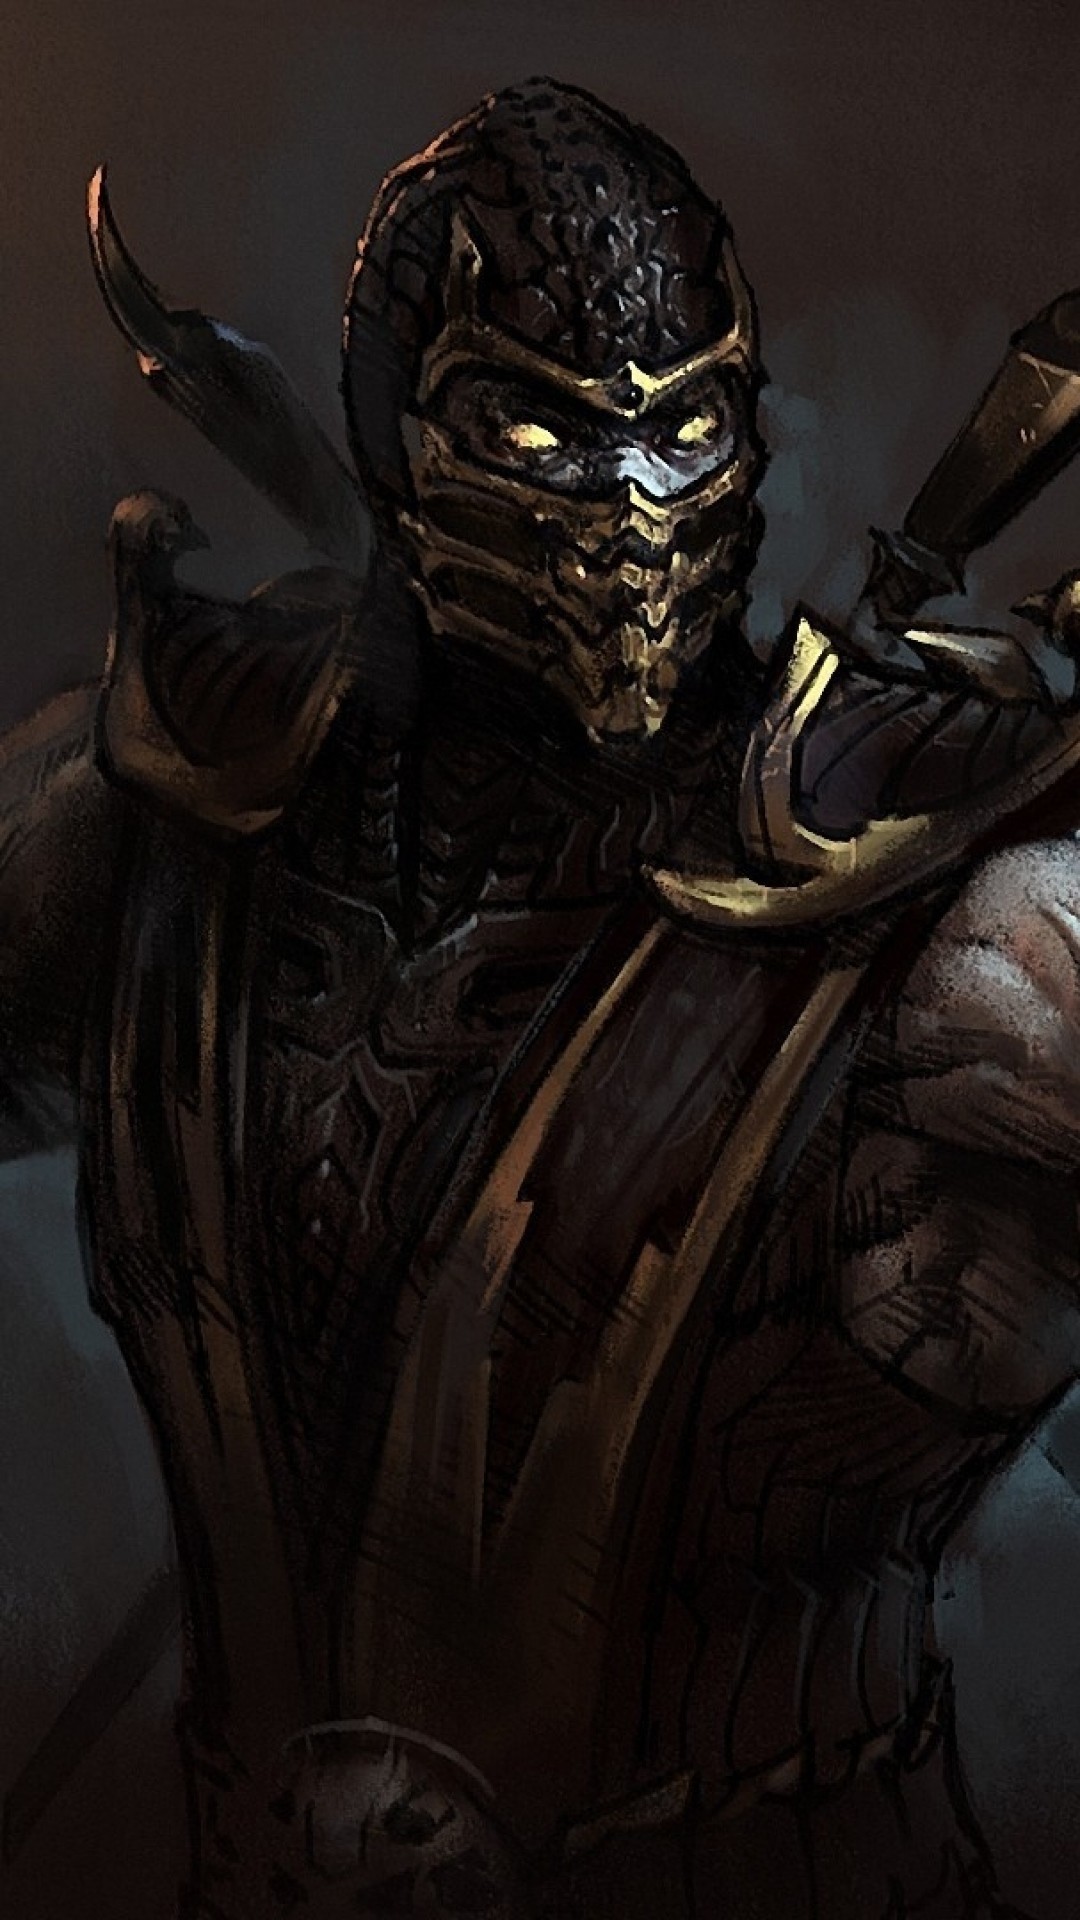 Mortal Kombat X iPhone Wallpaper Image